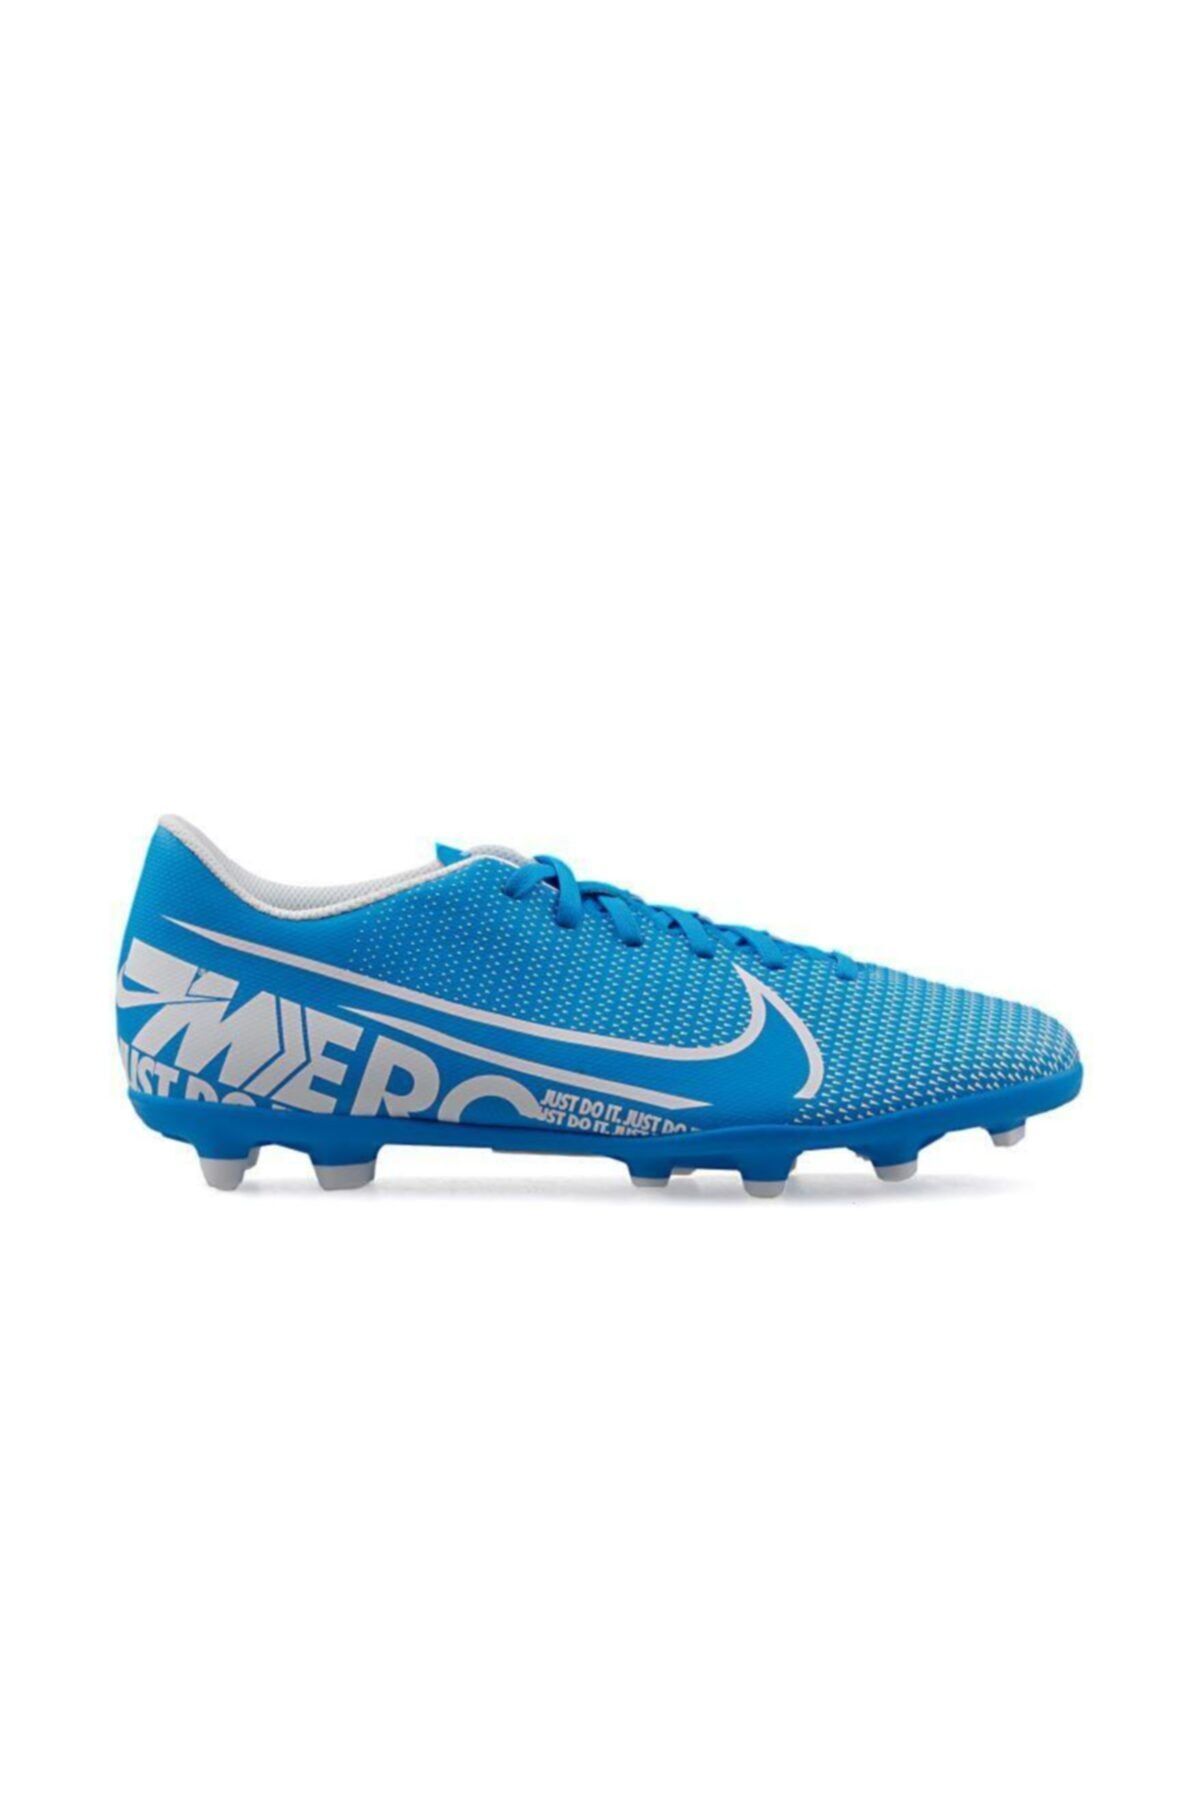 Nike Vapor 13 Club Fg/mg Krampon Futbol Ayakkabısı - At7968 - 414